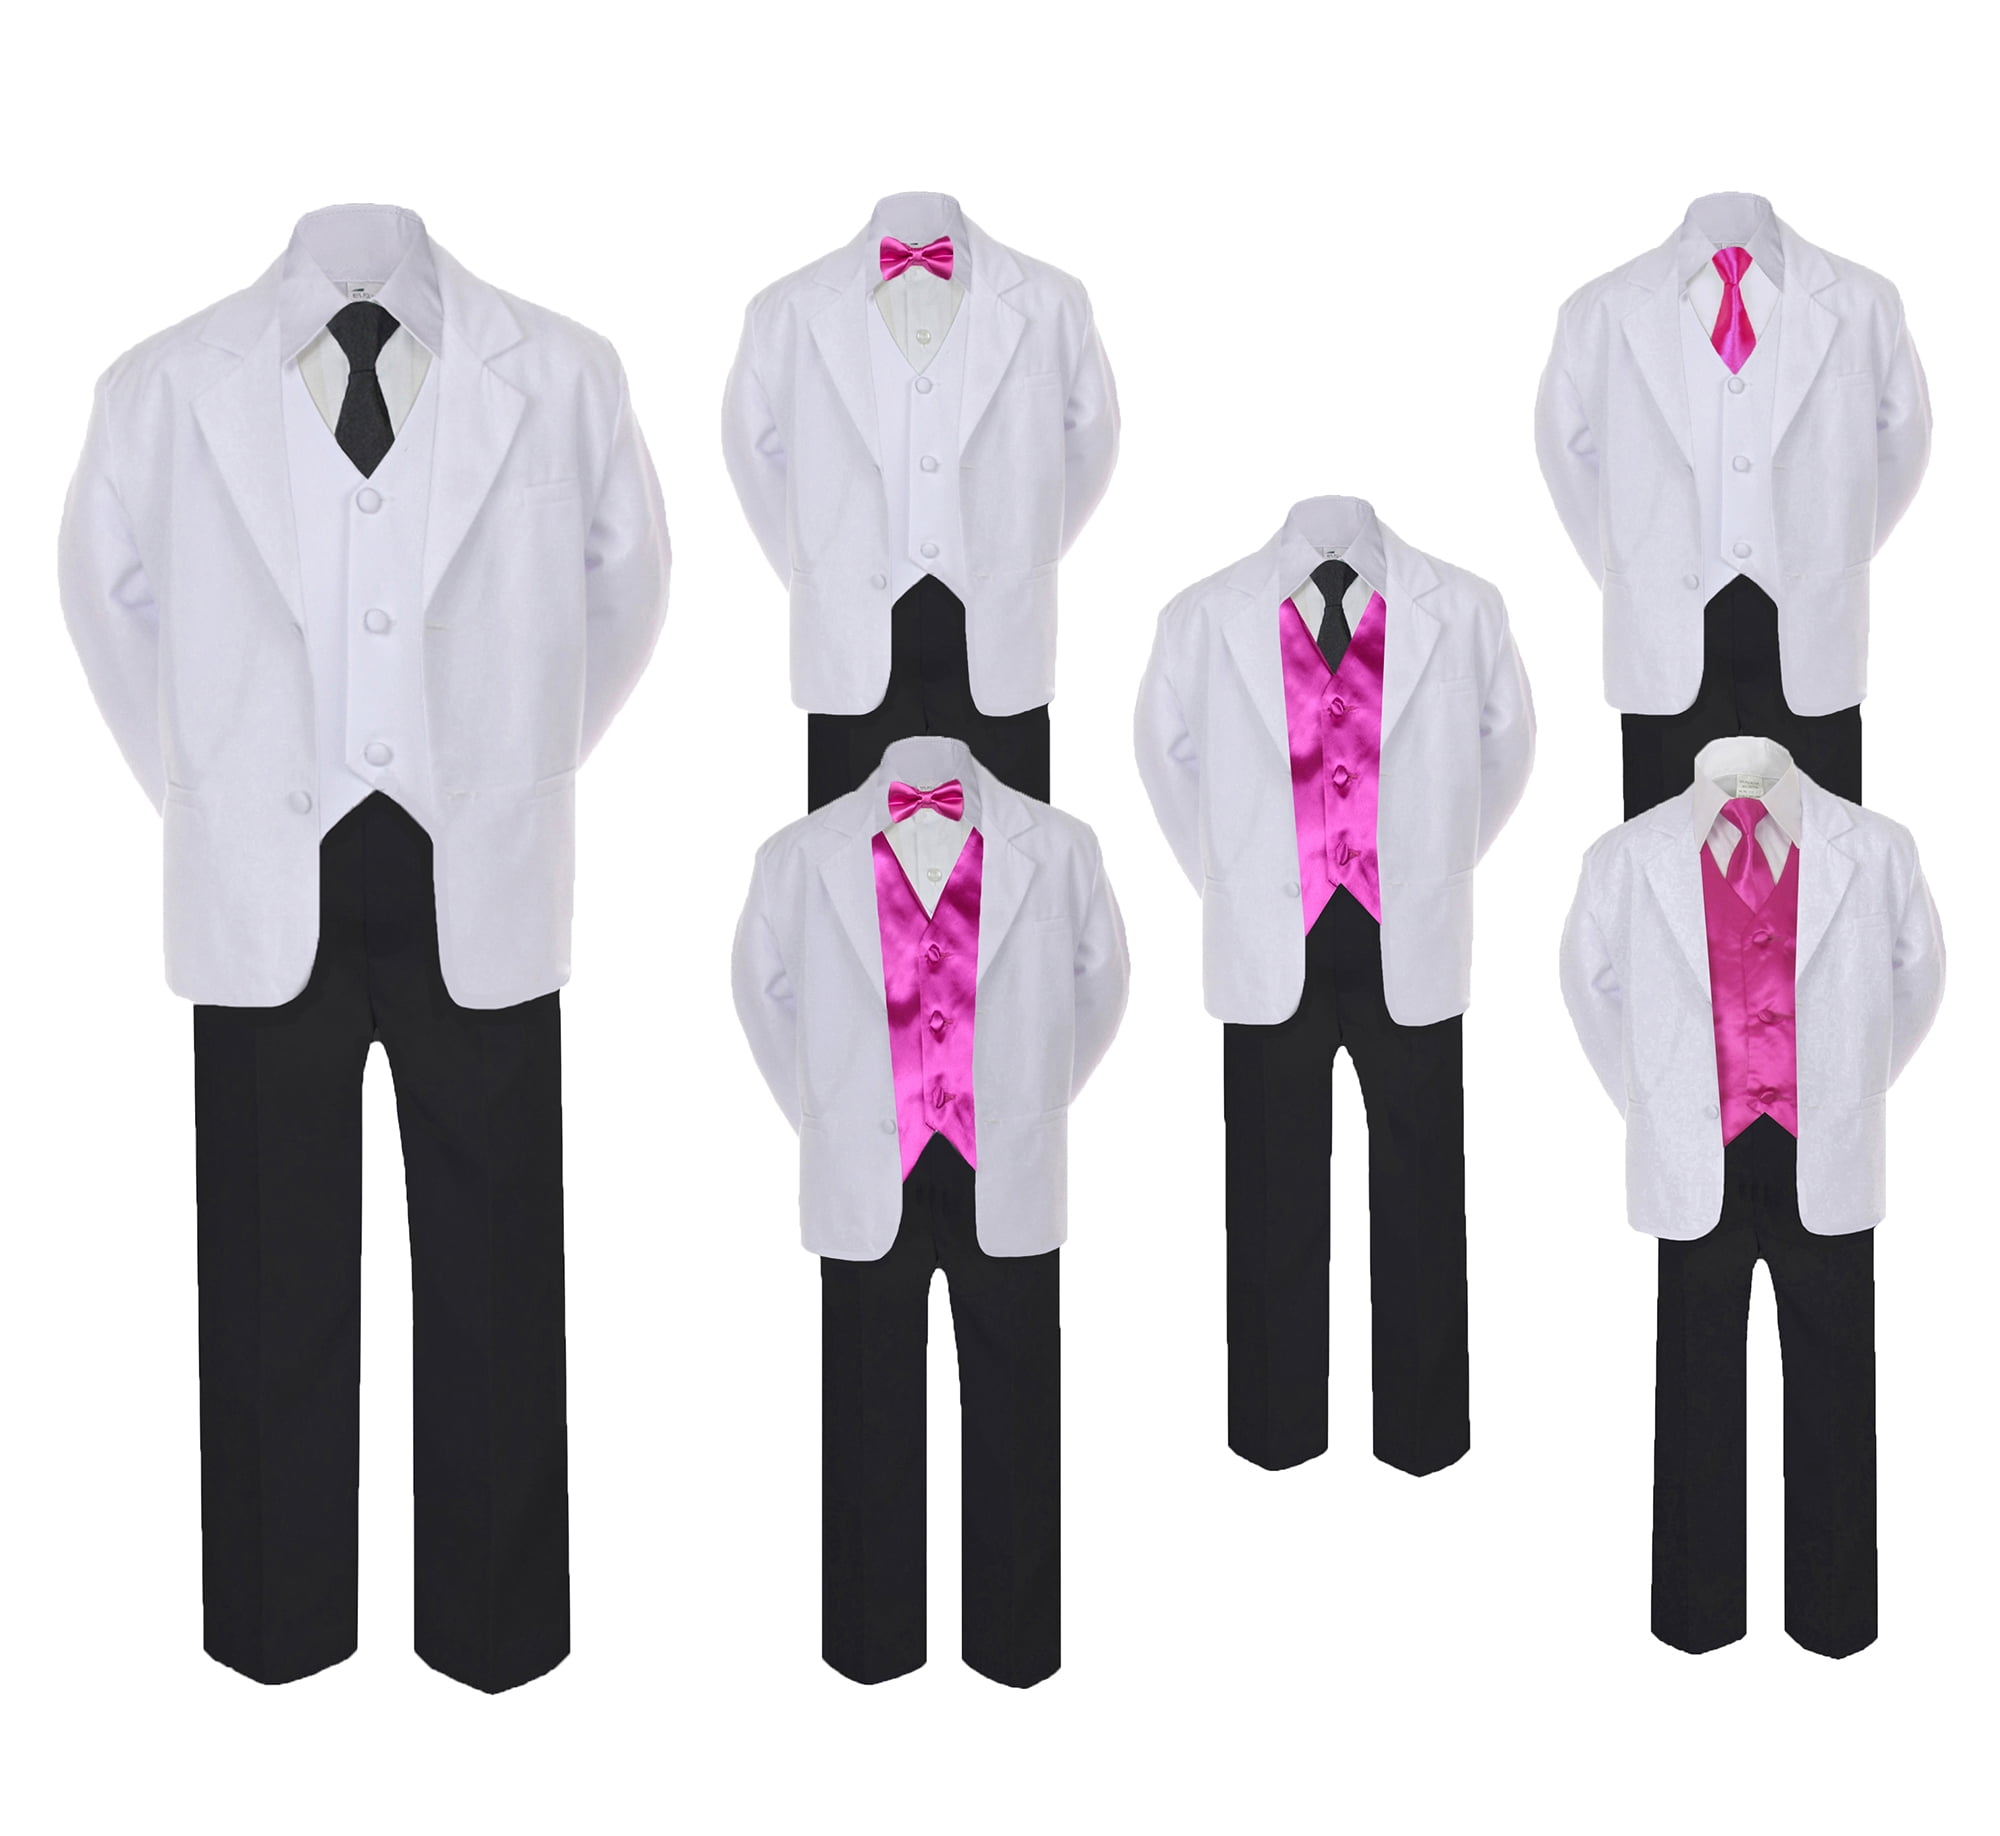 Suit and Tie Infant Bodysuit Creeper Tuxedo' Men's T-Shirt